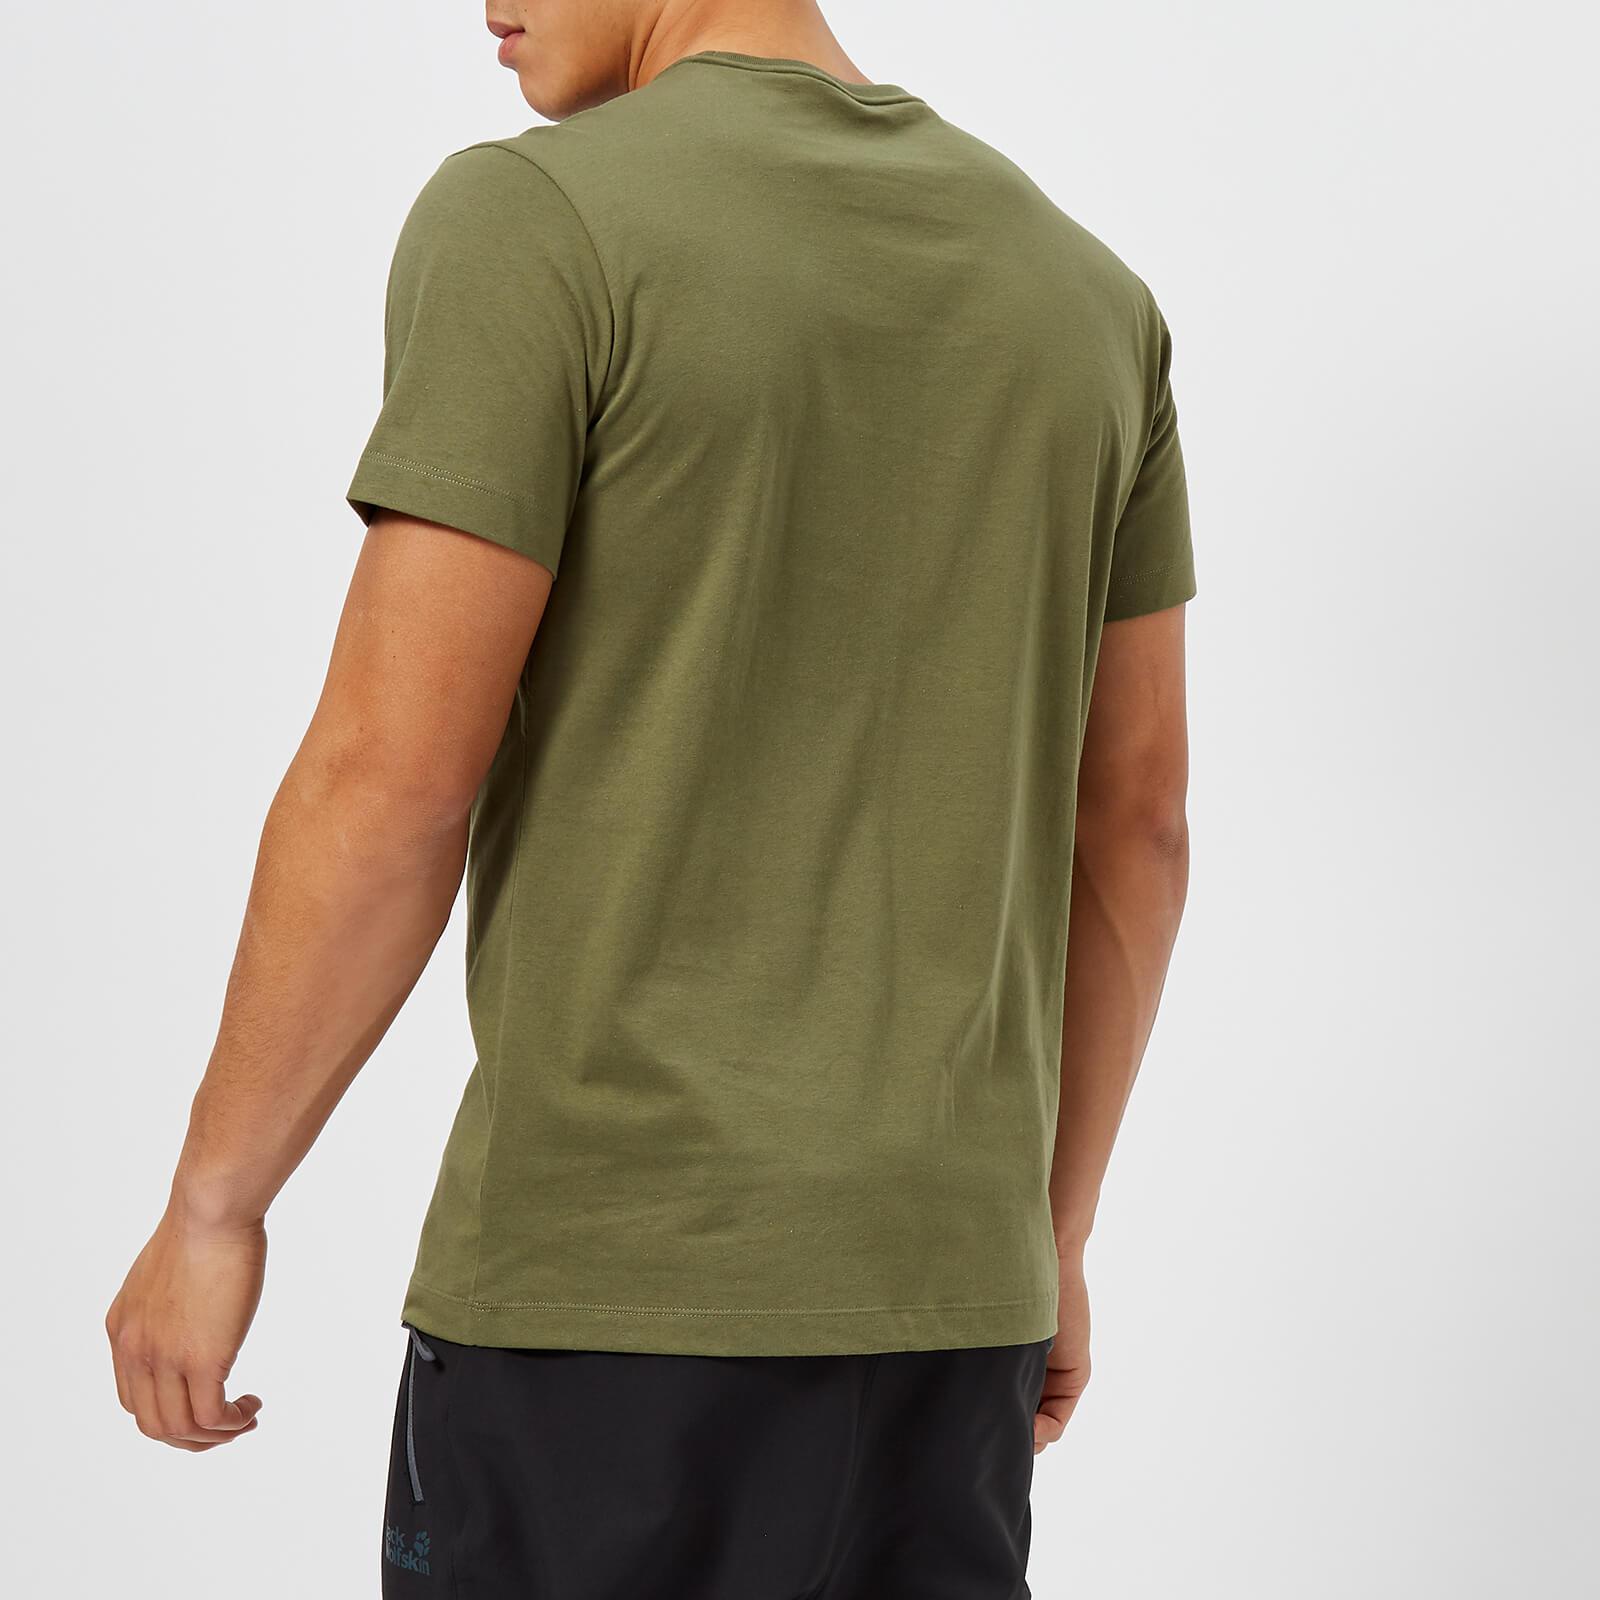 Lyst - Jack Wolfskin Essential Short Sleeve T-shirt in Green for Men